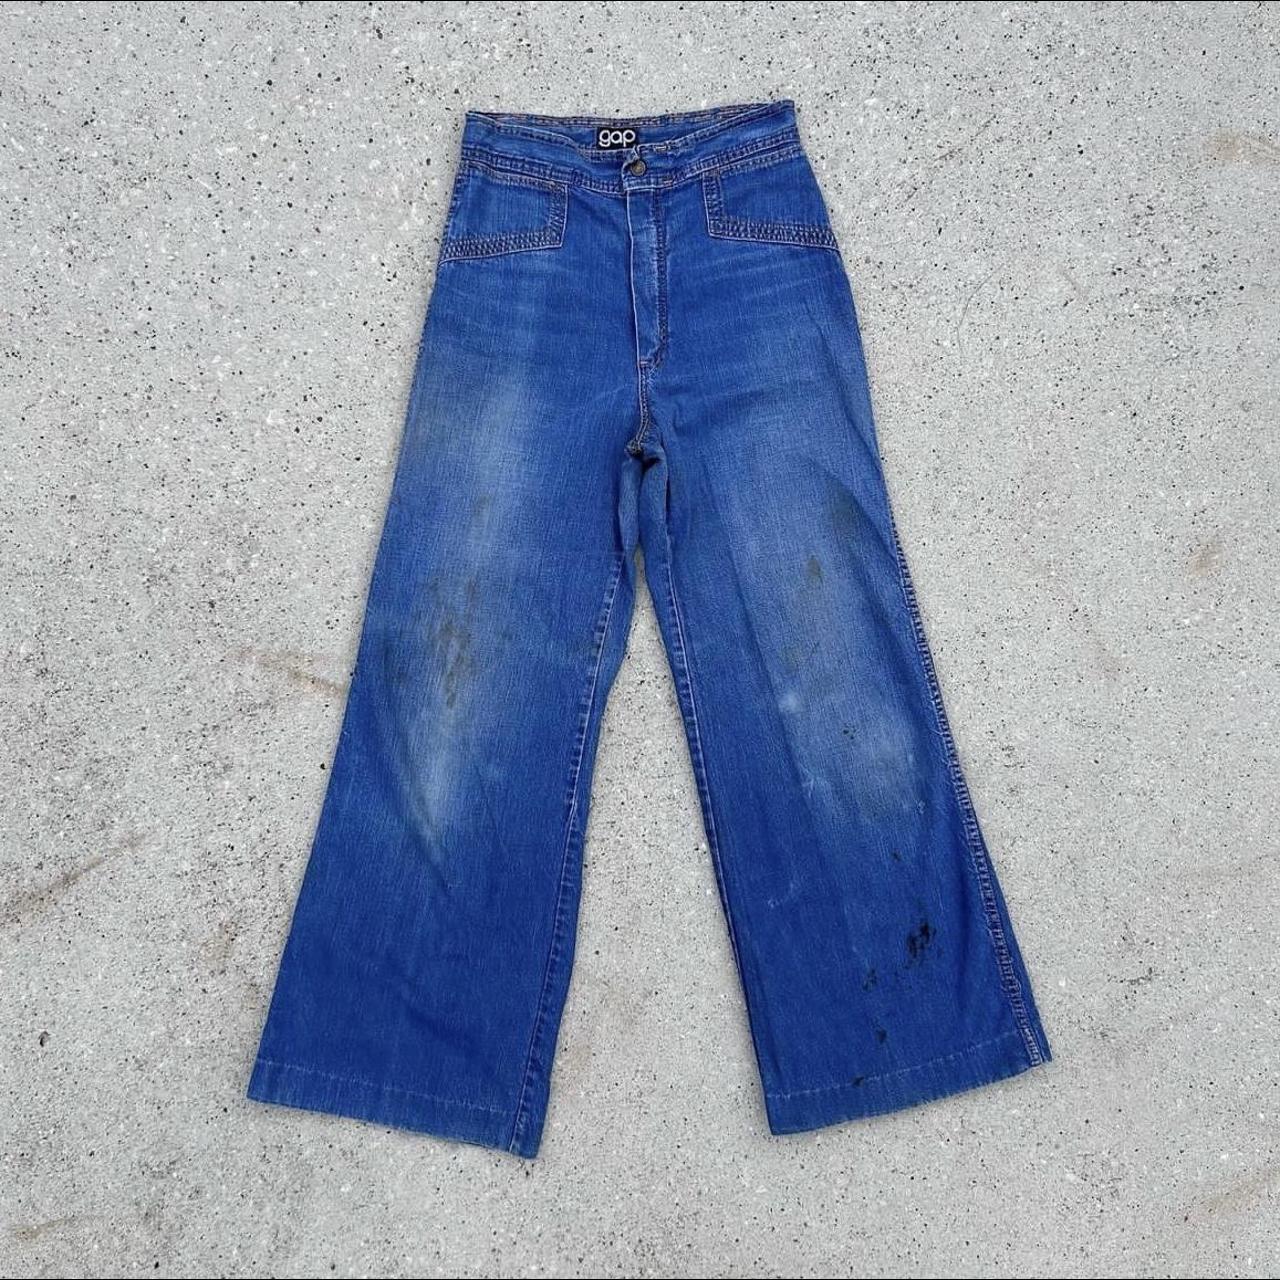 Size 13’ Vintage 70s Gap Blue Jeans, Wide Leg,... - Depop